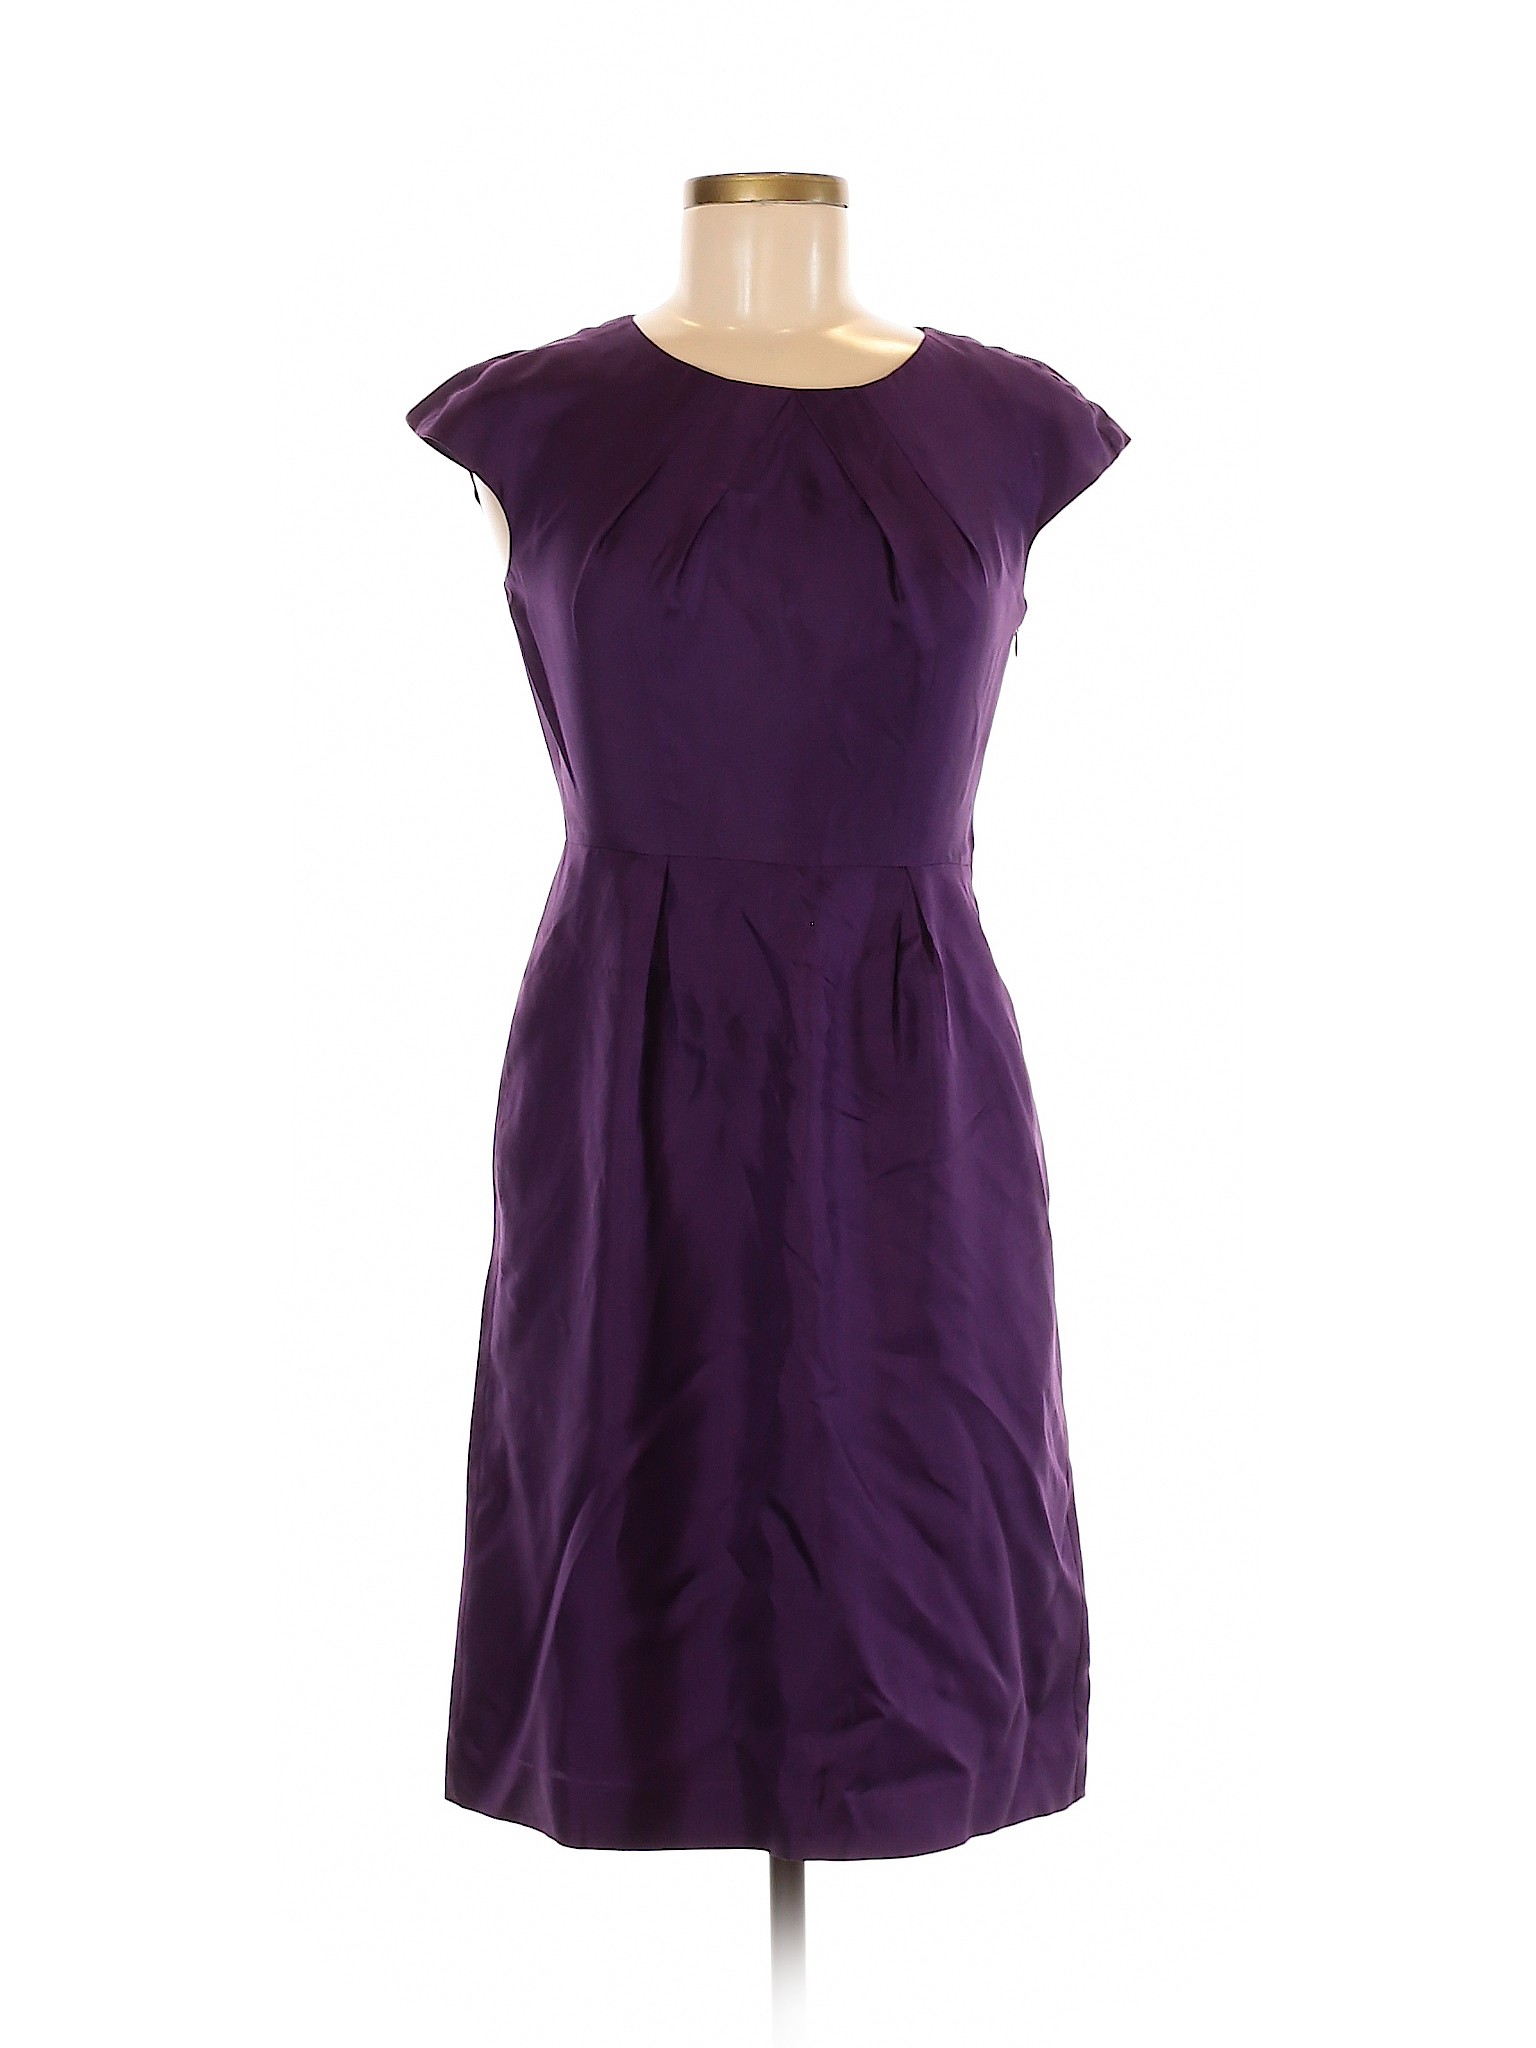 Banana Republic Women Purple Cocktail Dress 2 | eBay